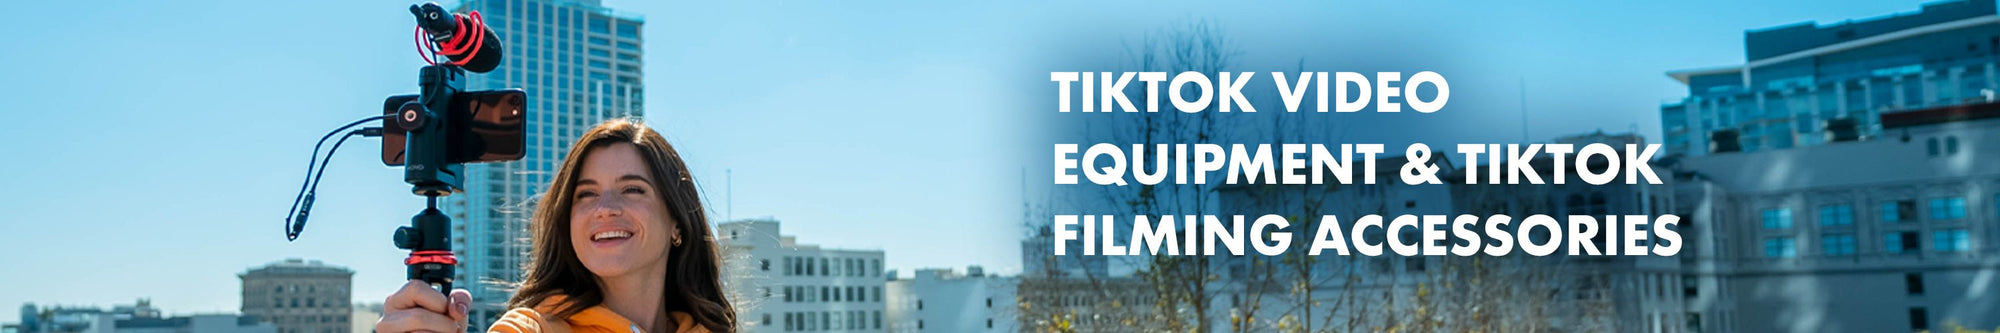 TikTok Equipment & Filming Accessories